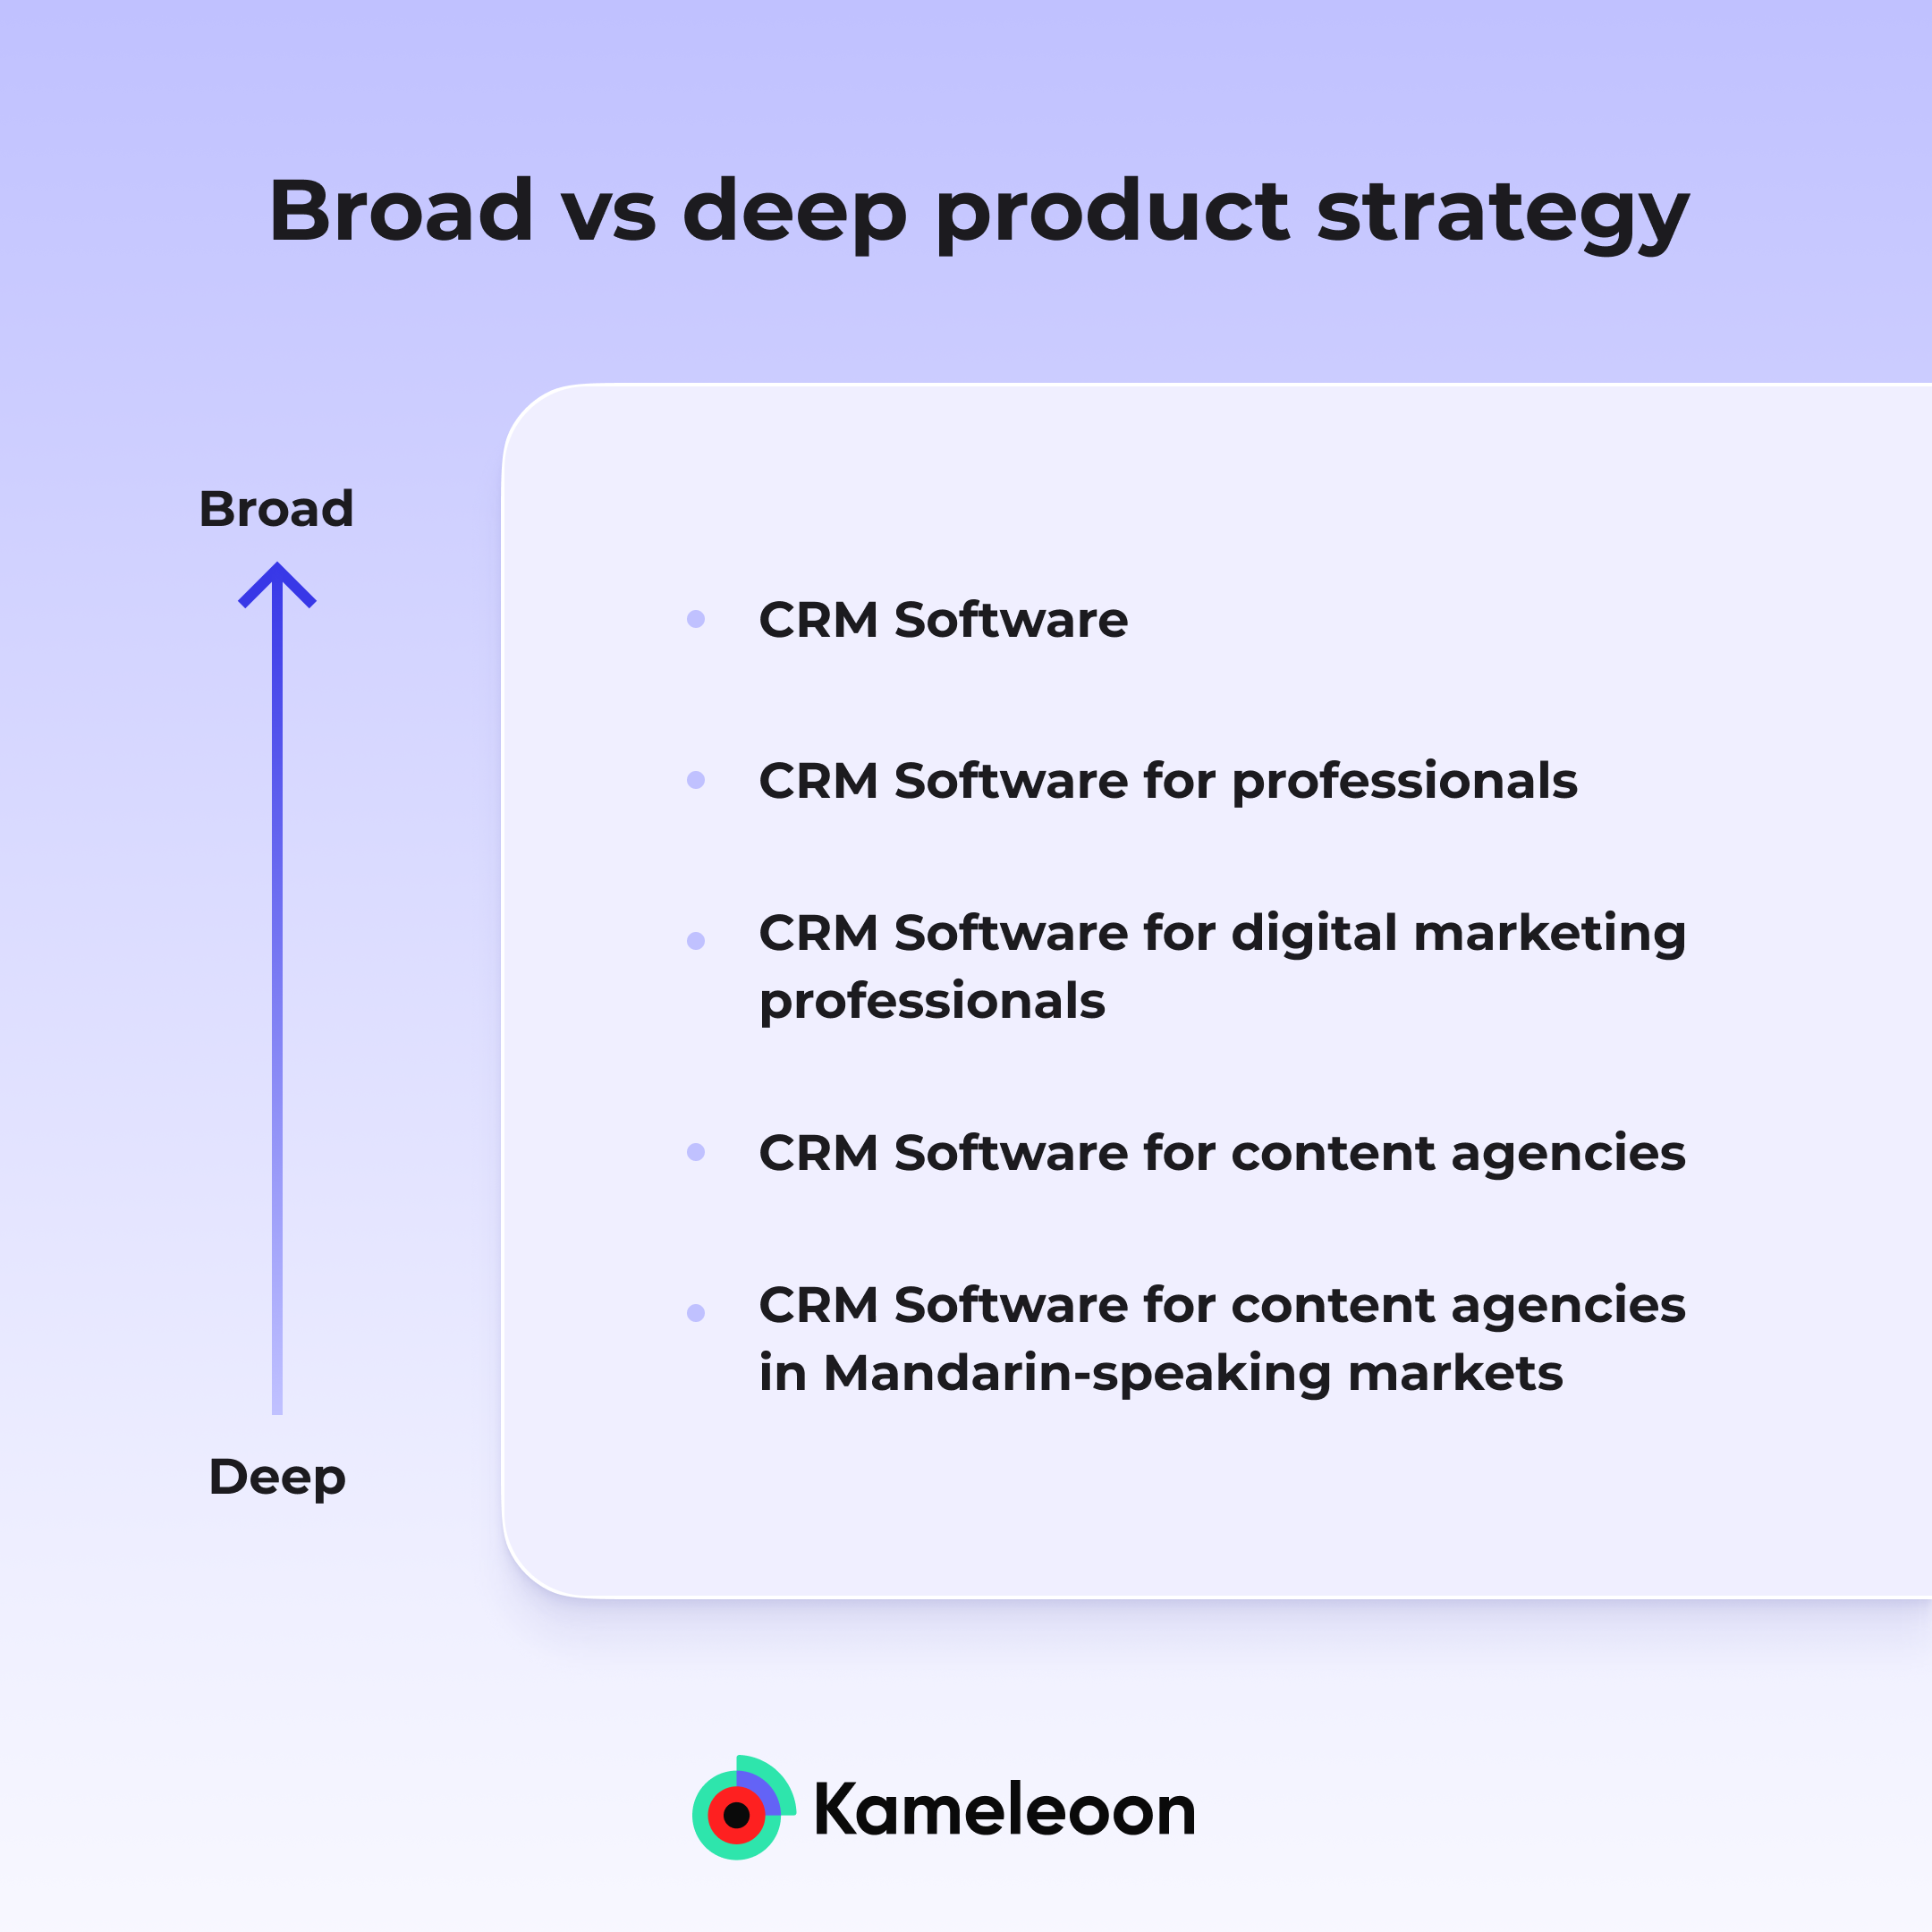 Deep vs. broad SaaS product strategy